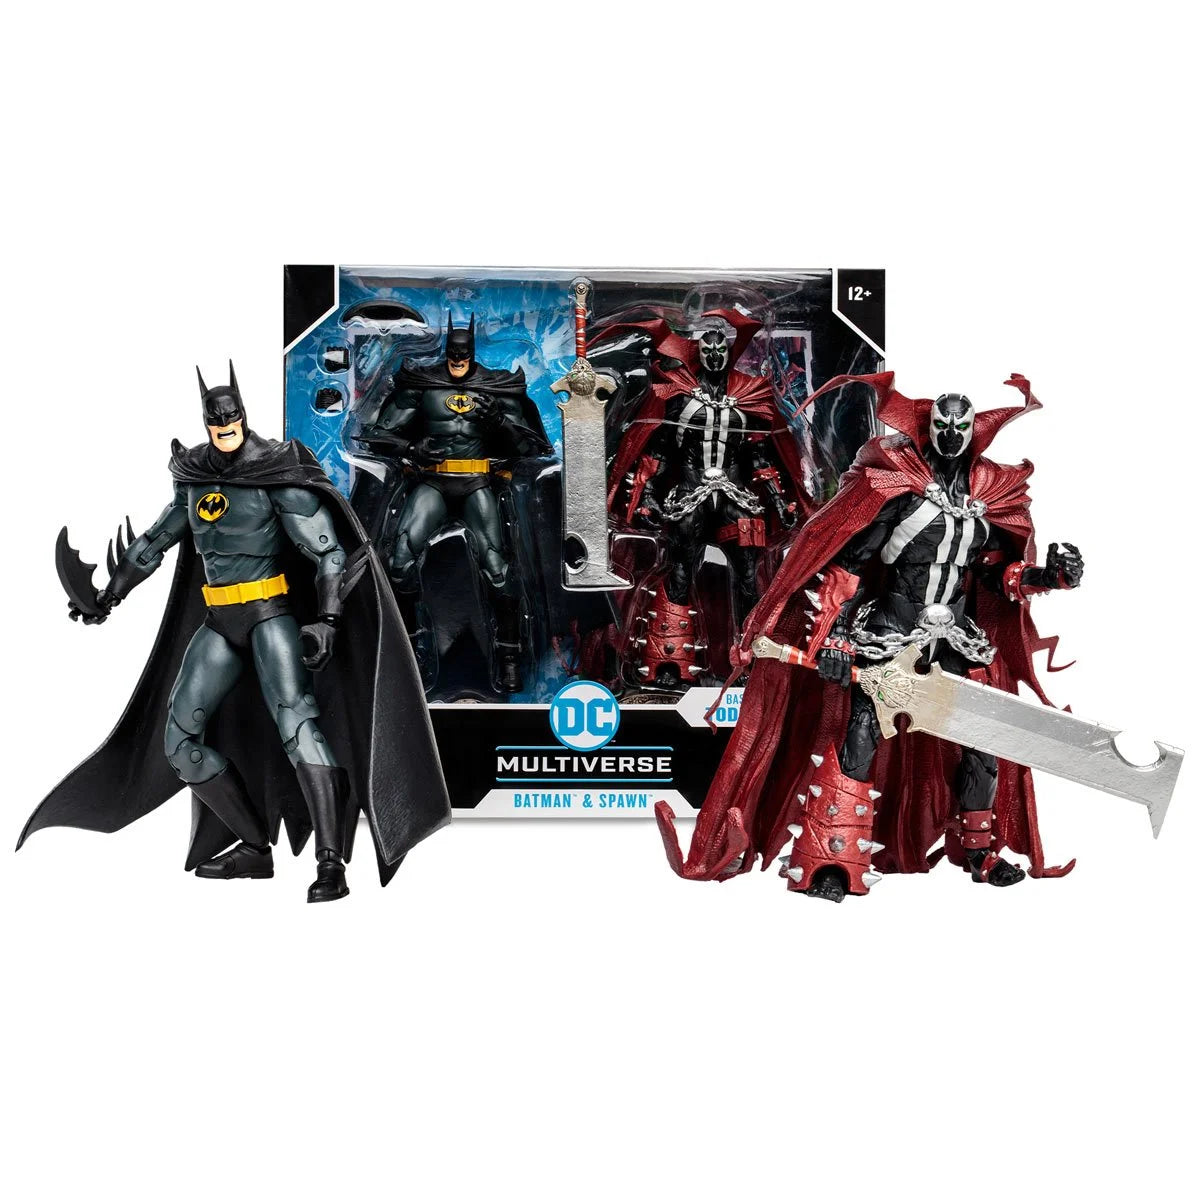 DC Multiverse Batman & Spawn Action figure - Heretoserveyou